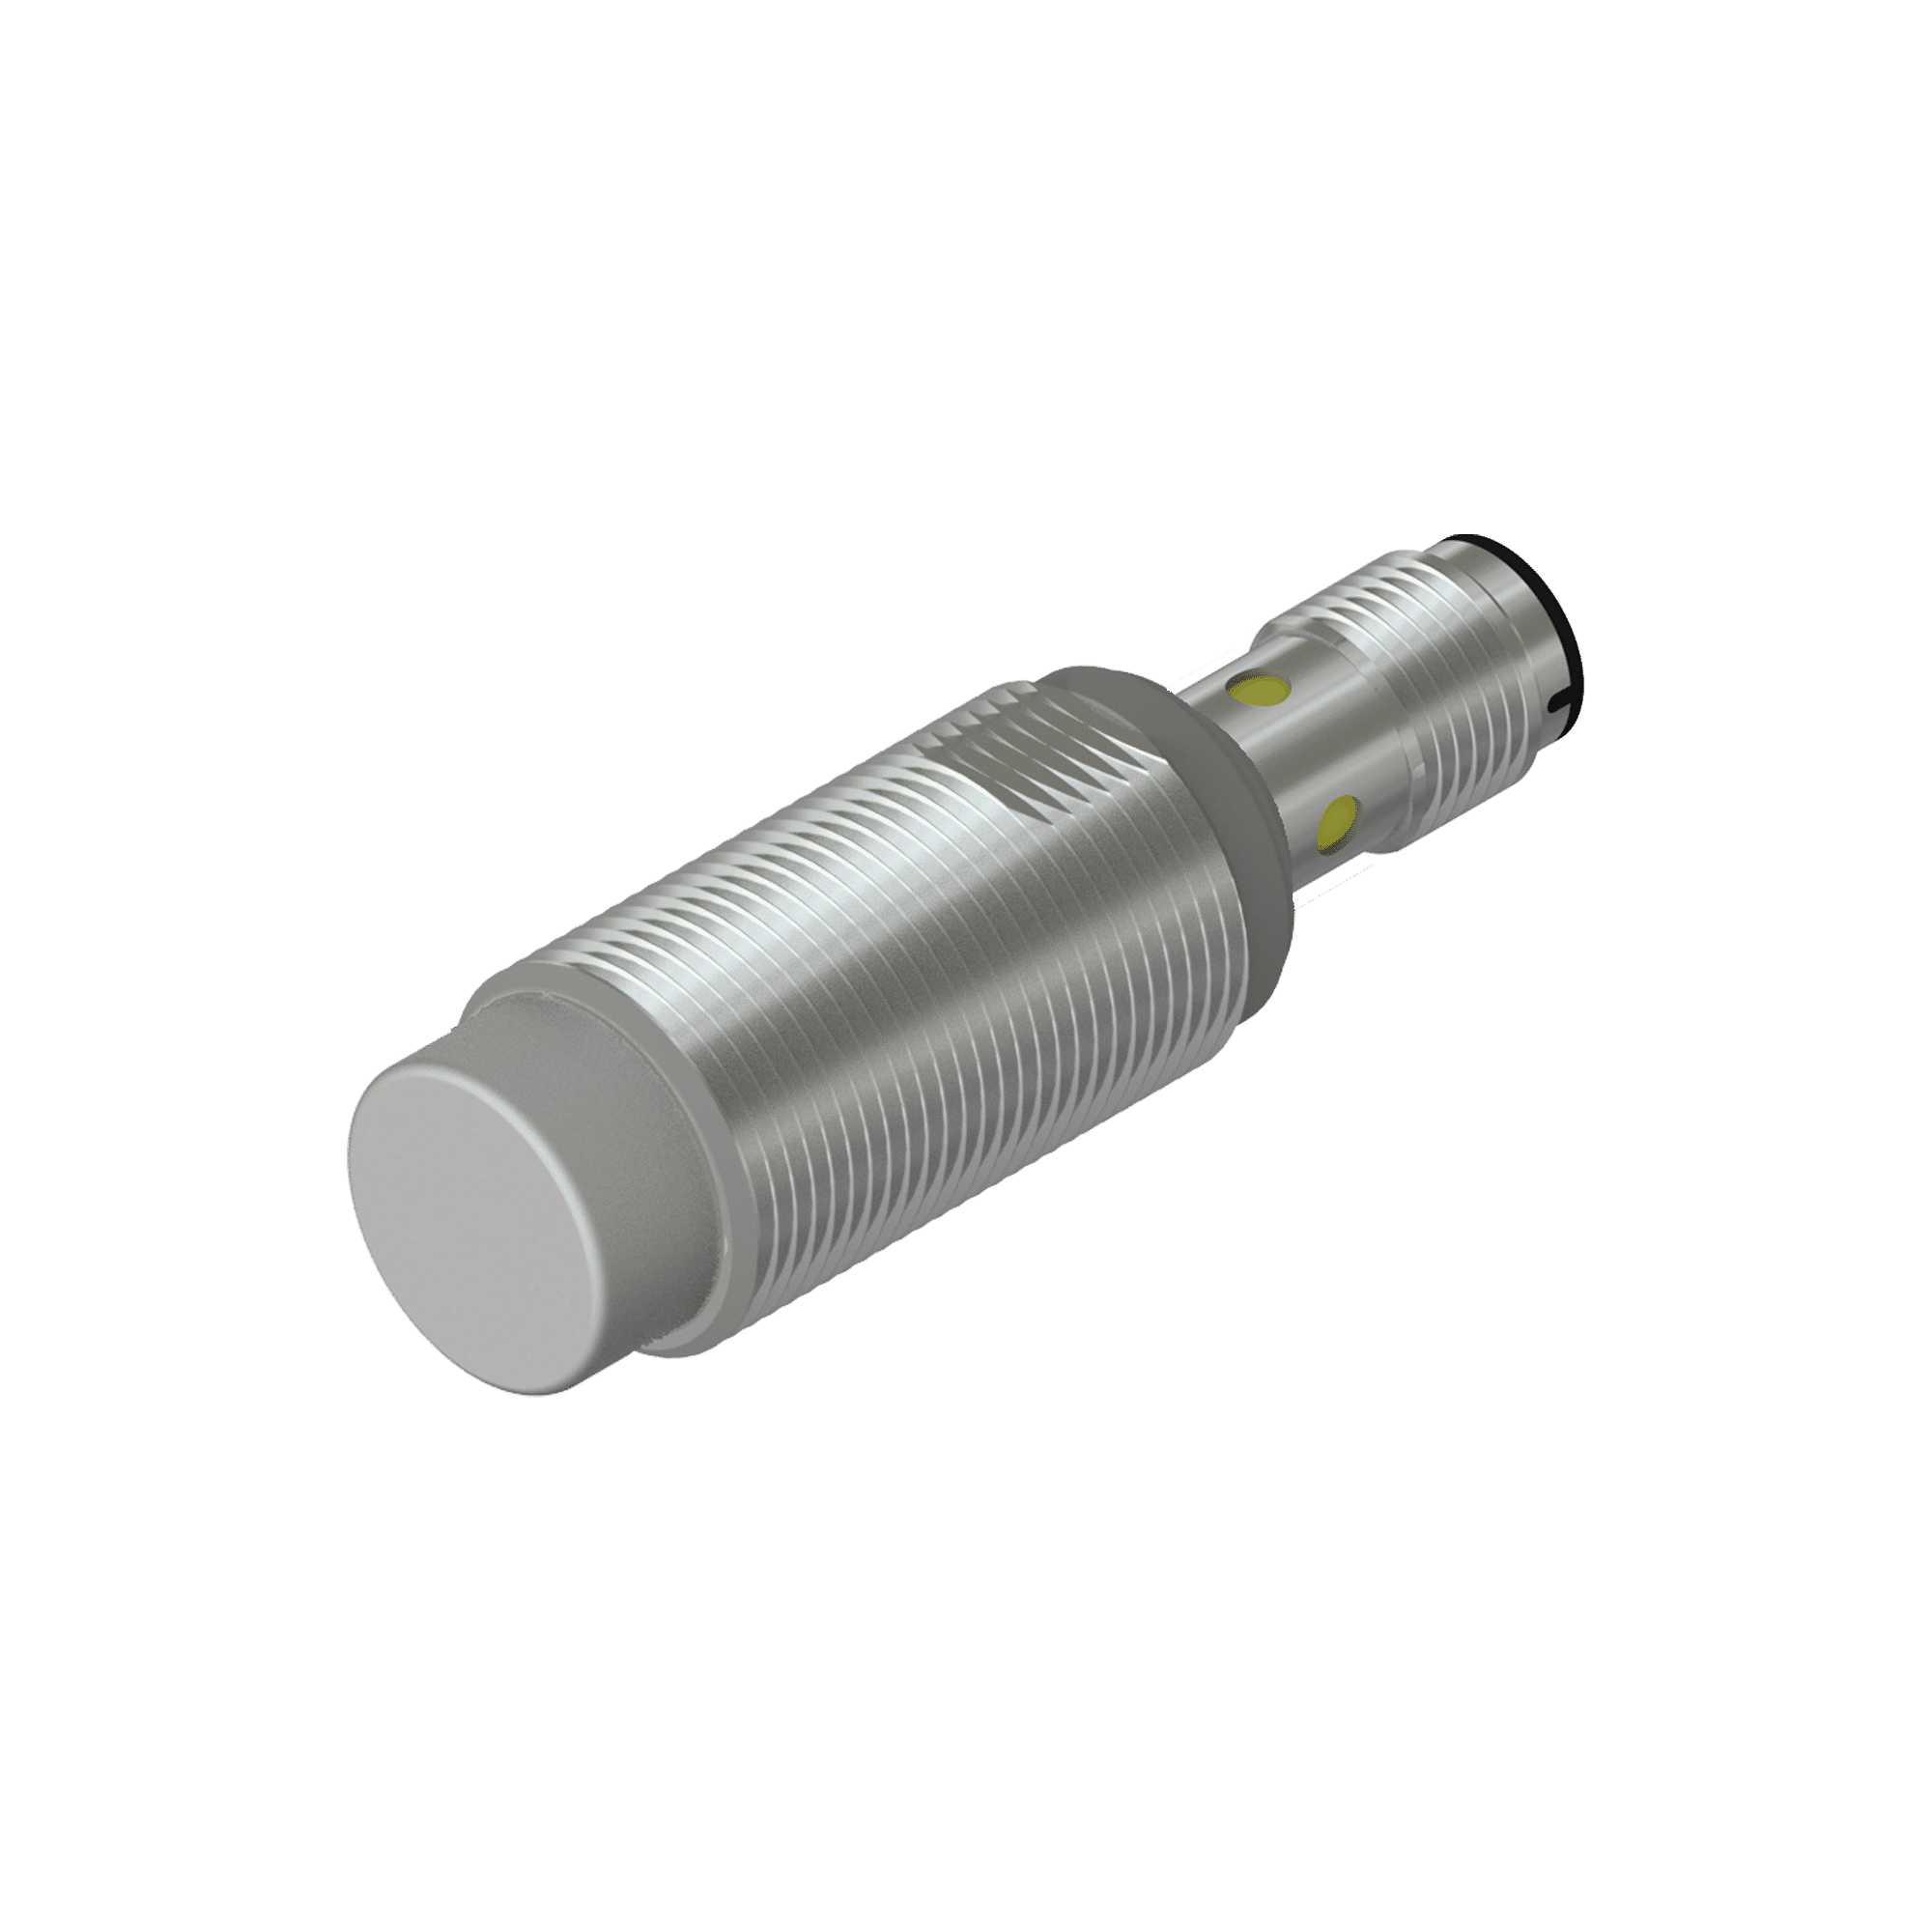 Inductive round sensor M18 Length 30mm PNP NO output M12 male connector connection